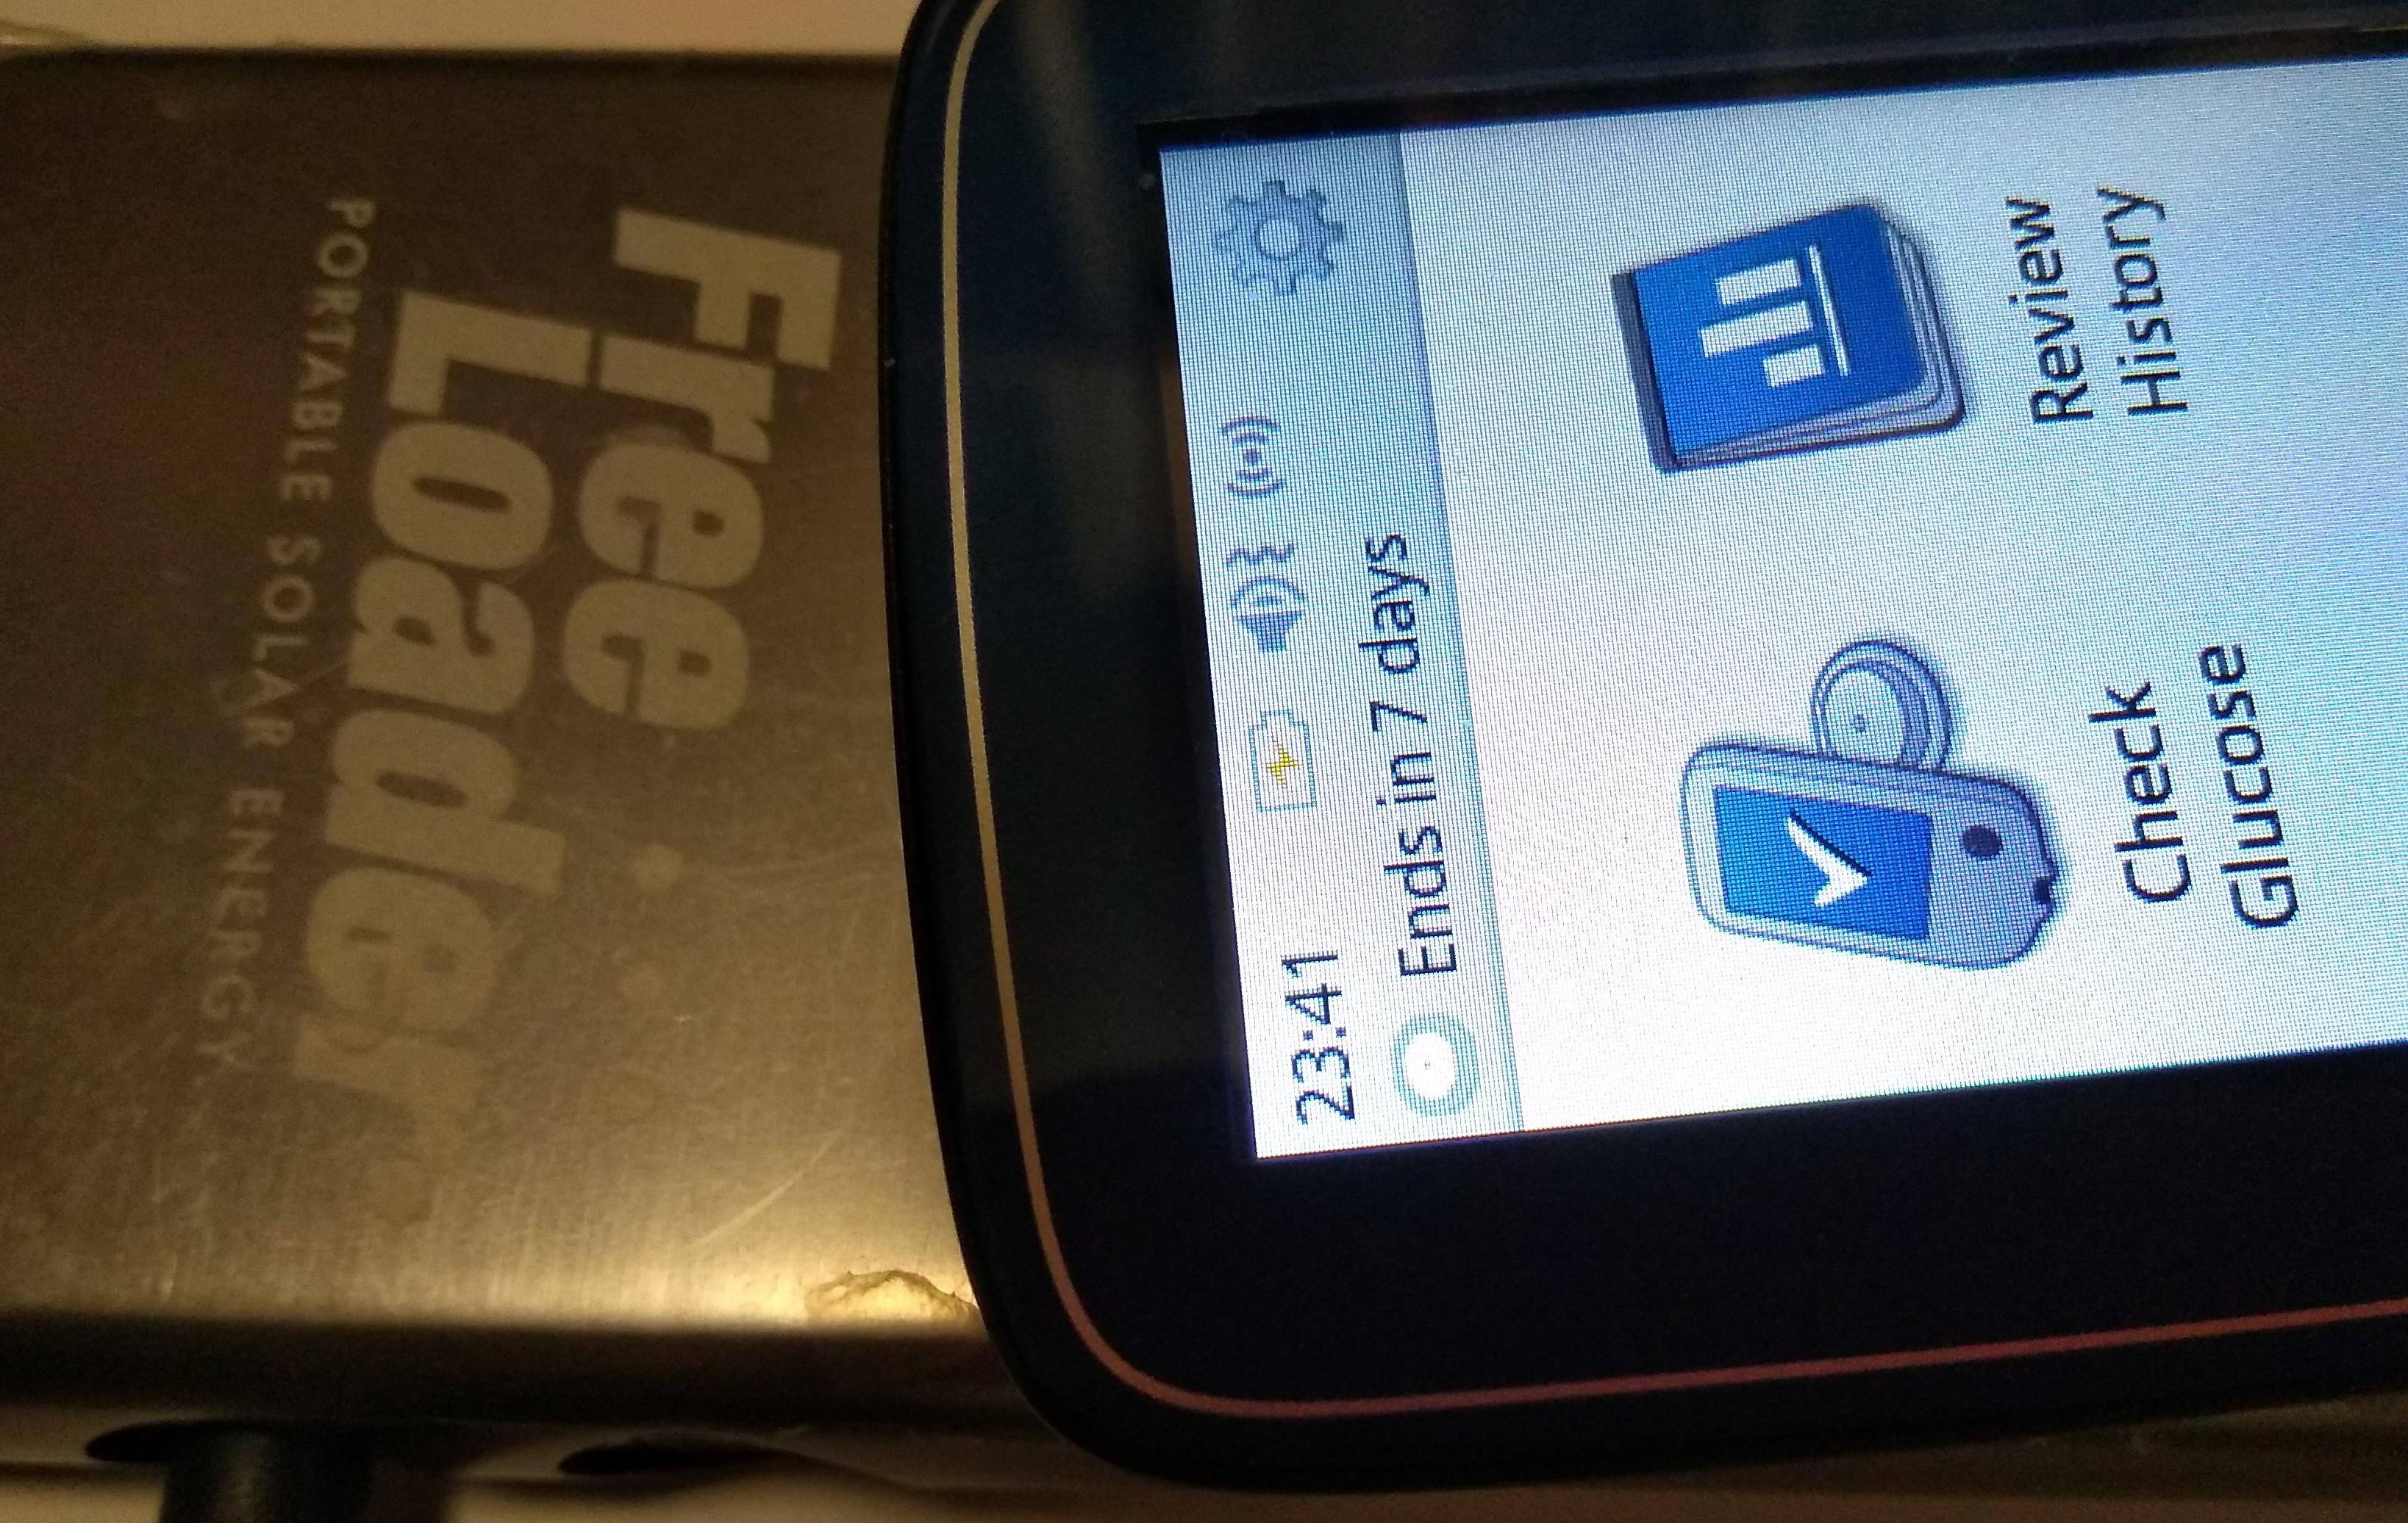 Bluetooth Blood Glucose Meter FreeStyle Libre Sensor ABBOTT Sensor Kit 24h  Diabetes Monitoring Free Waterproof Tape - AliExpress